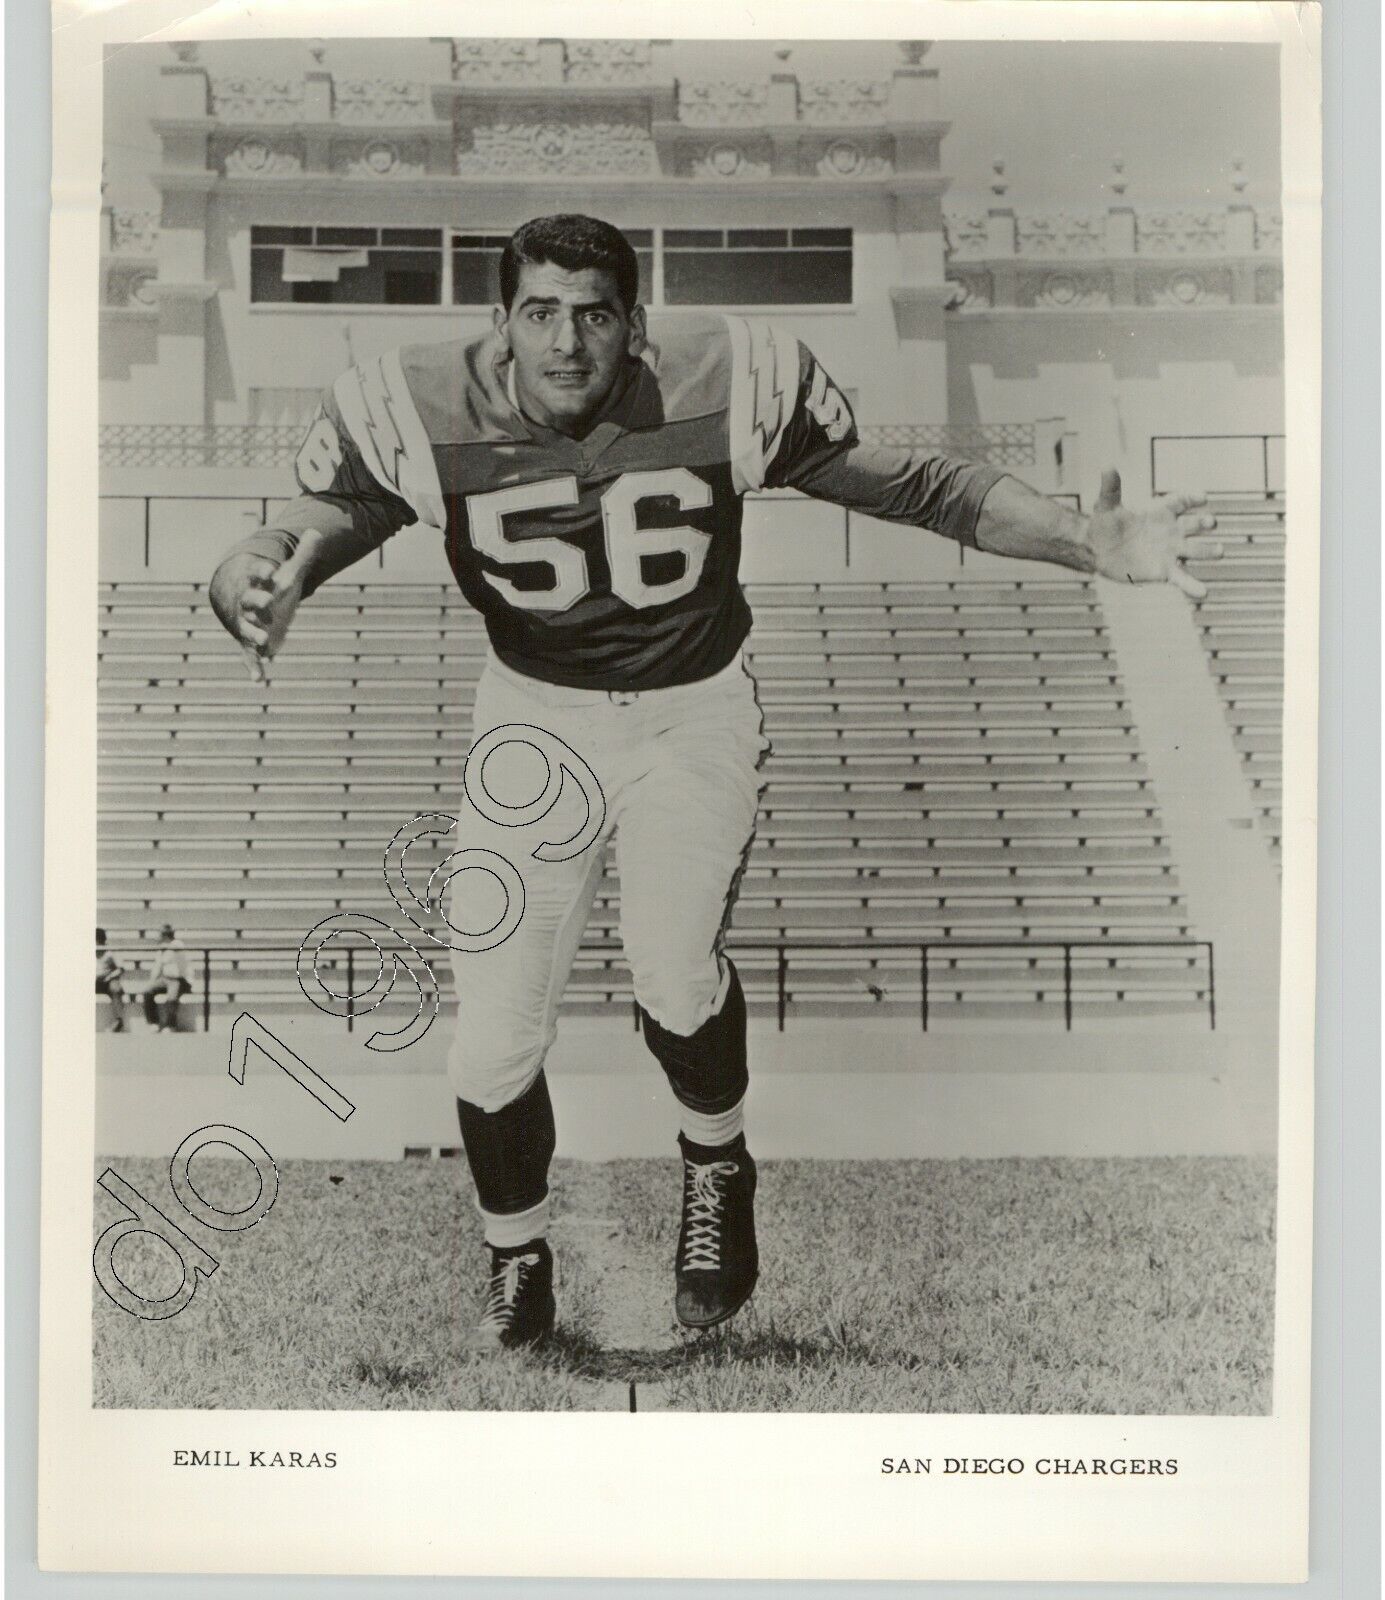 EMIL KARAS of SAN DIEGO CHARGERS, CA USA 1962 Artistic VTG Football Press Photo